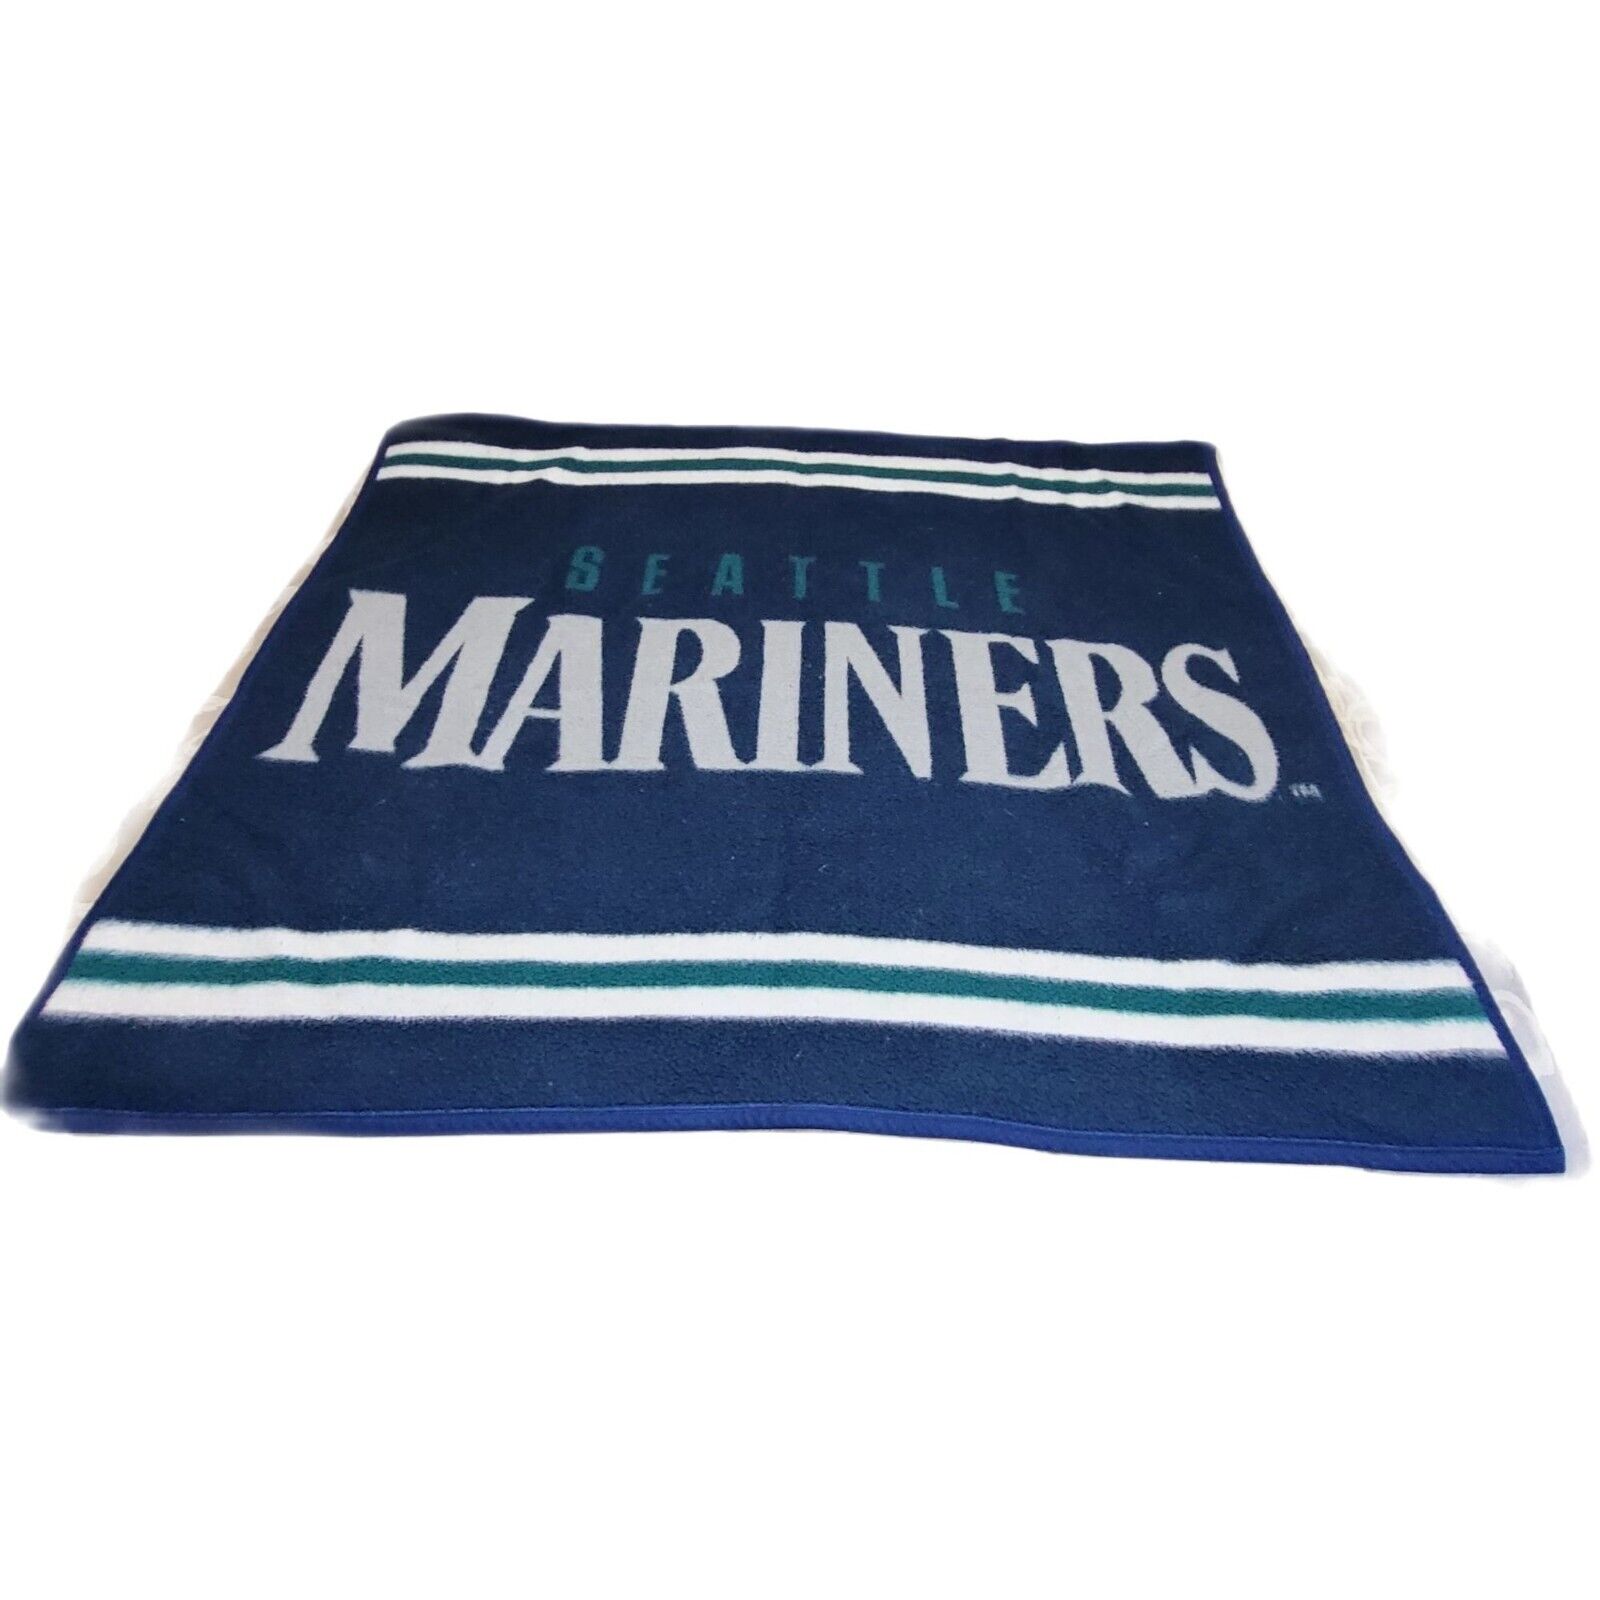 Biederlack Seattle Mariners Throw Blanket MLB 55 X 47 Inches Vintage Reversible